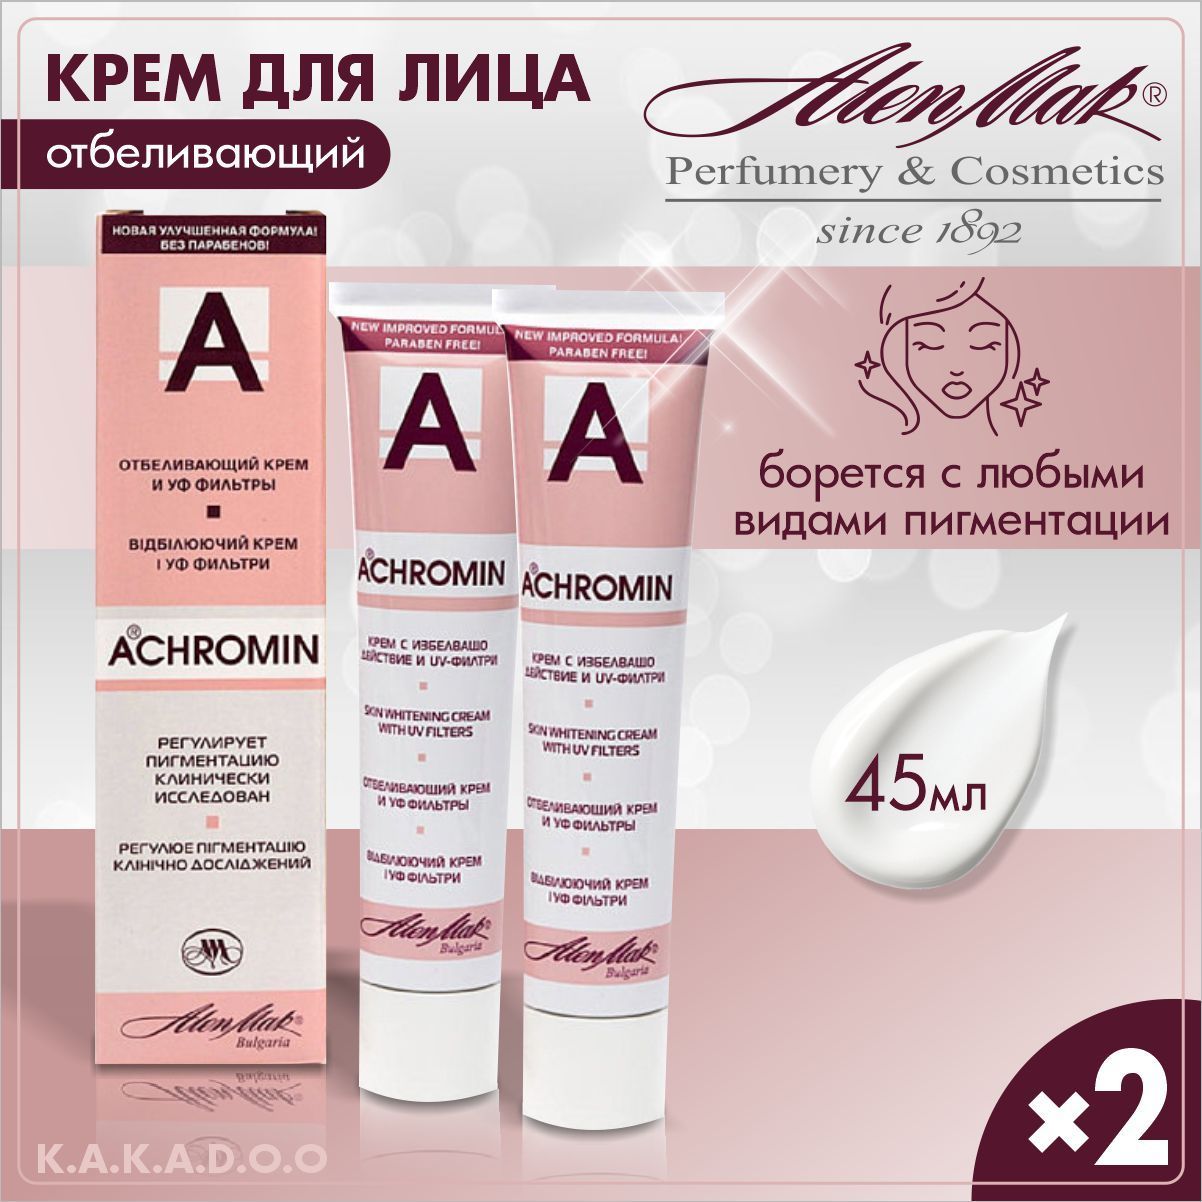 Ахромин крем отбеливающий купить. Ахромин крем отбеливающий. Ахромин крем отбеливающий для лица. Крем отбеливающий achromin с УФ-фильтрами 45 мл. Ахромин солнцезащитный крем.